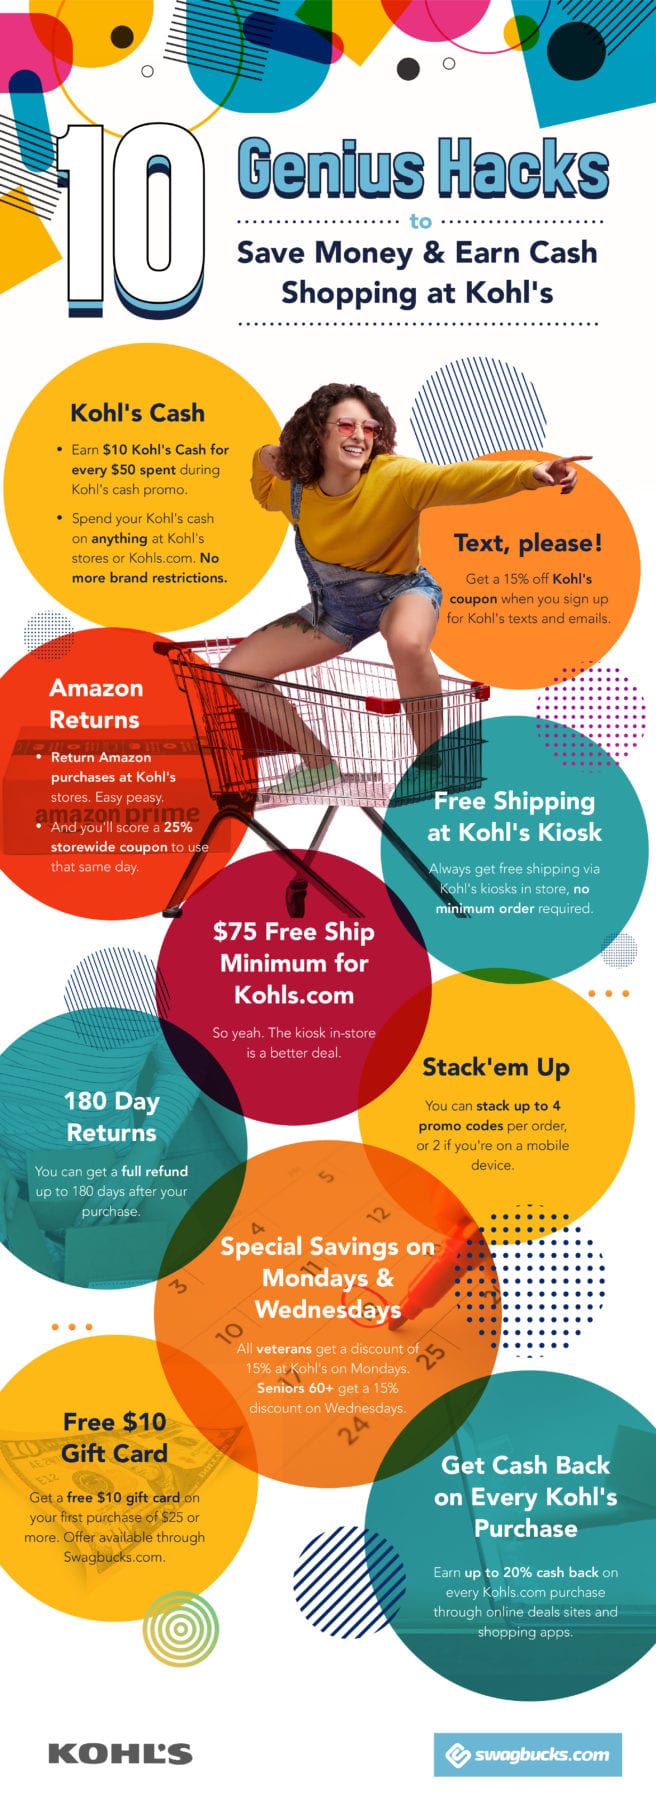 Kohl's 10 Genius Hacks Infographic - Save Money - Earn Cash - Swagbucks